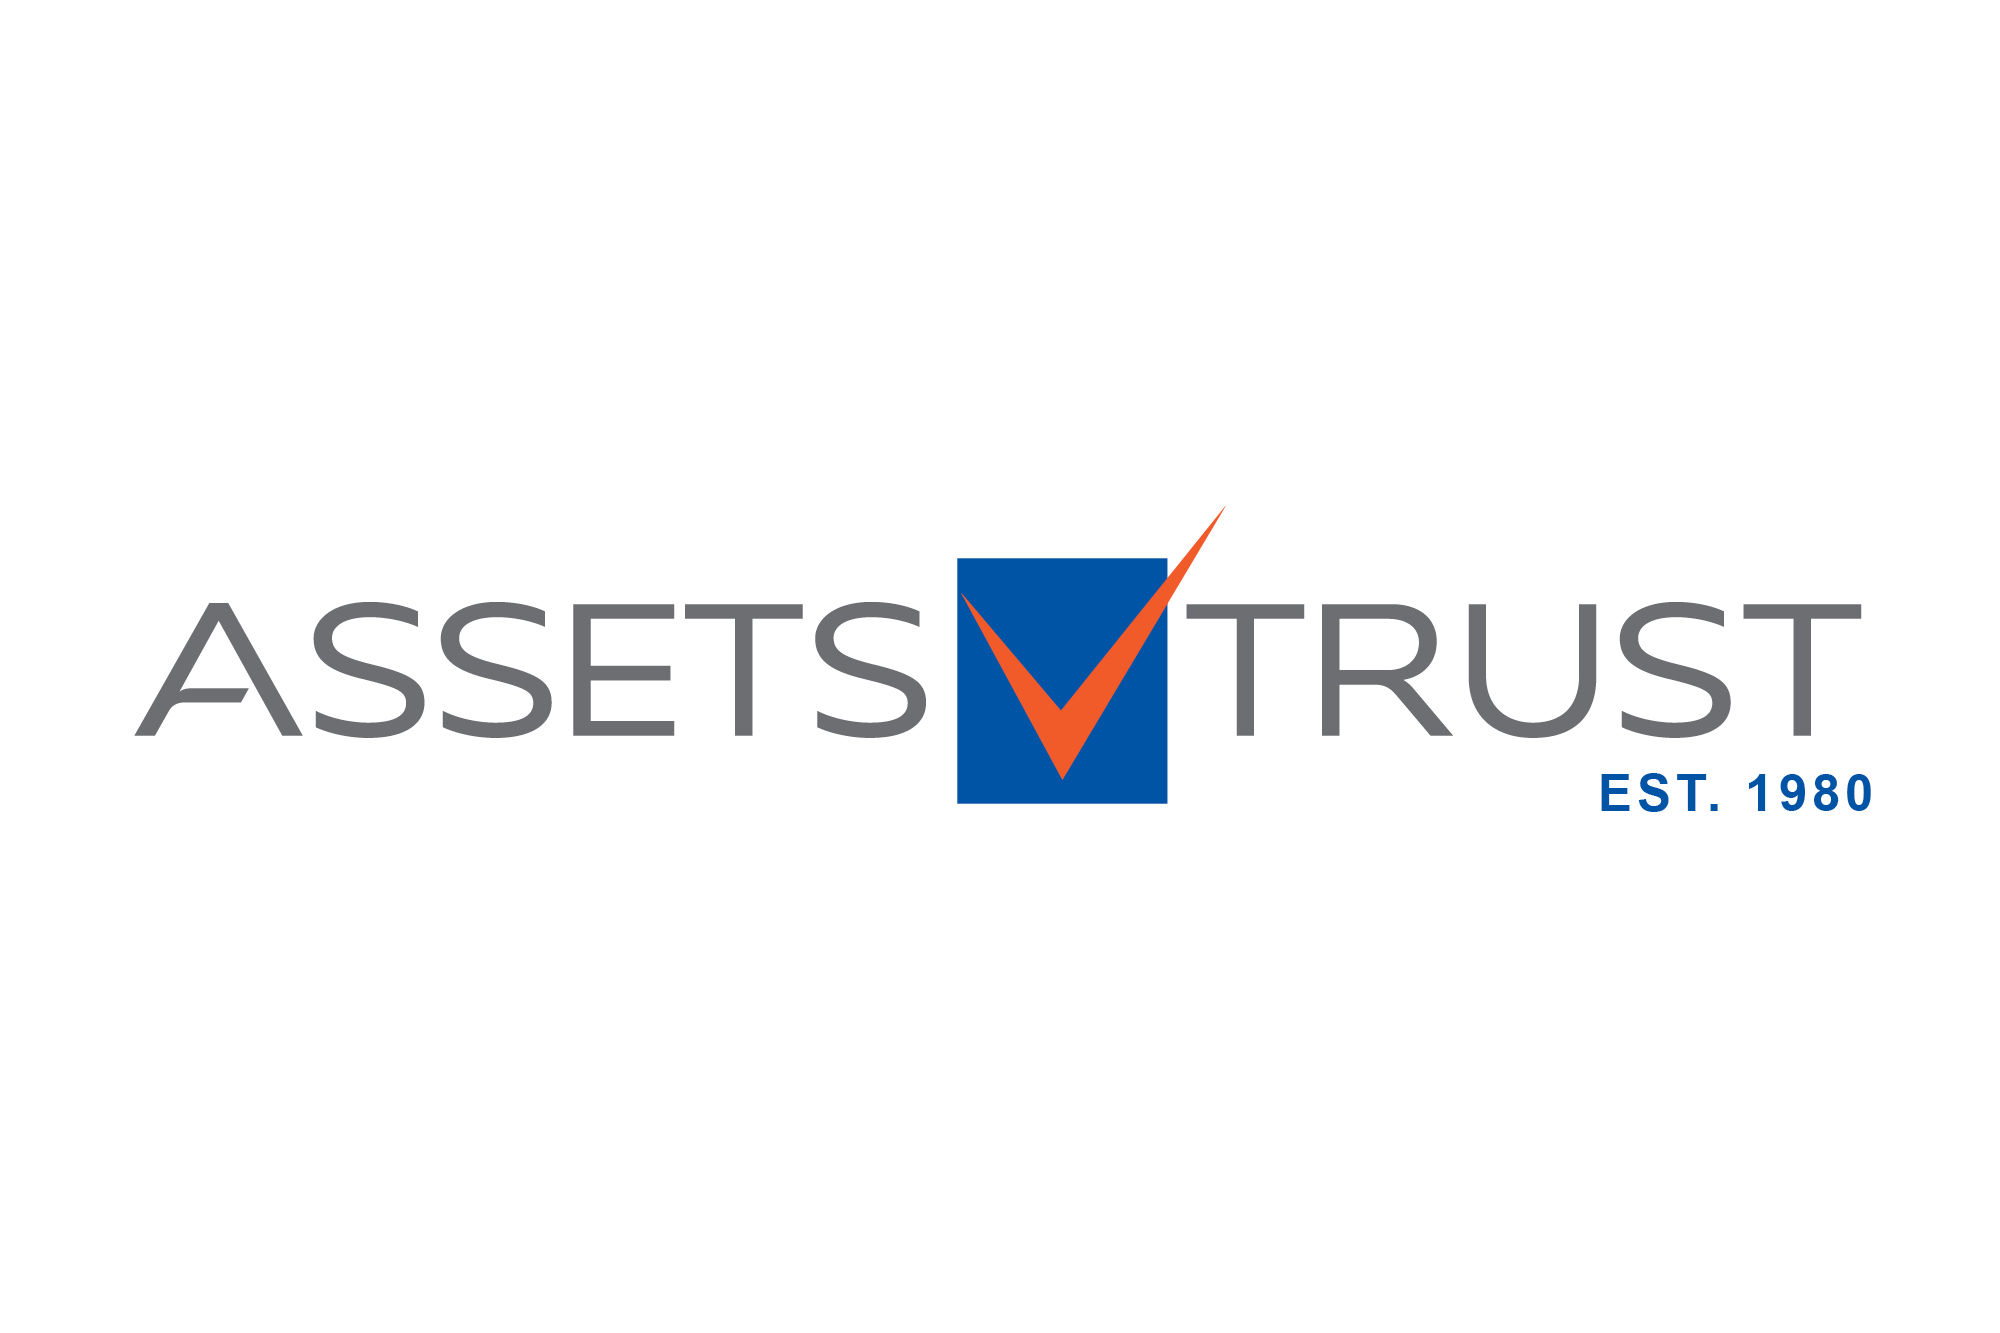 Assets Trust